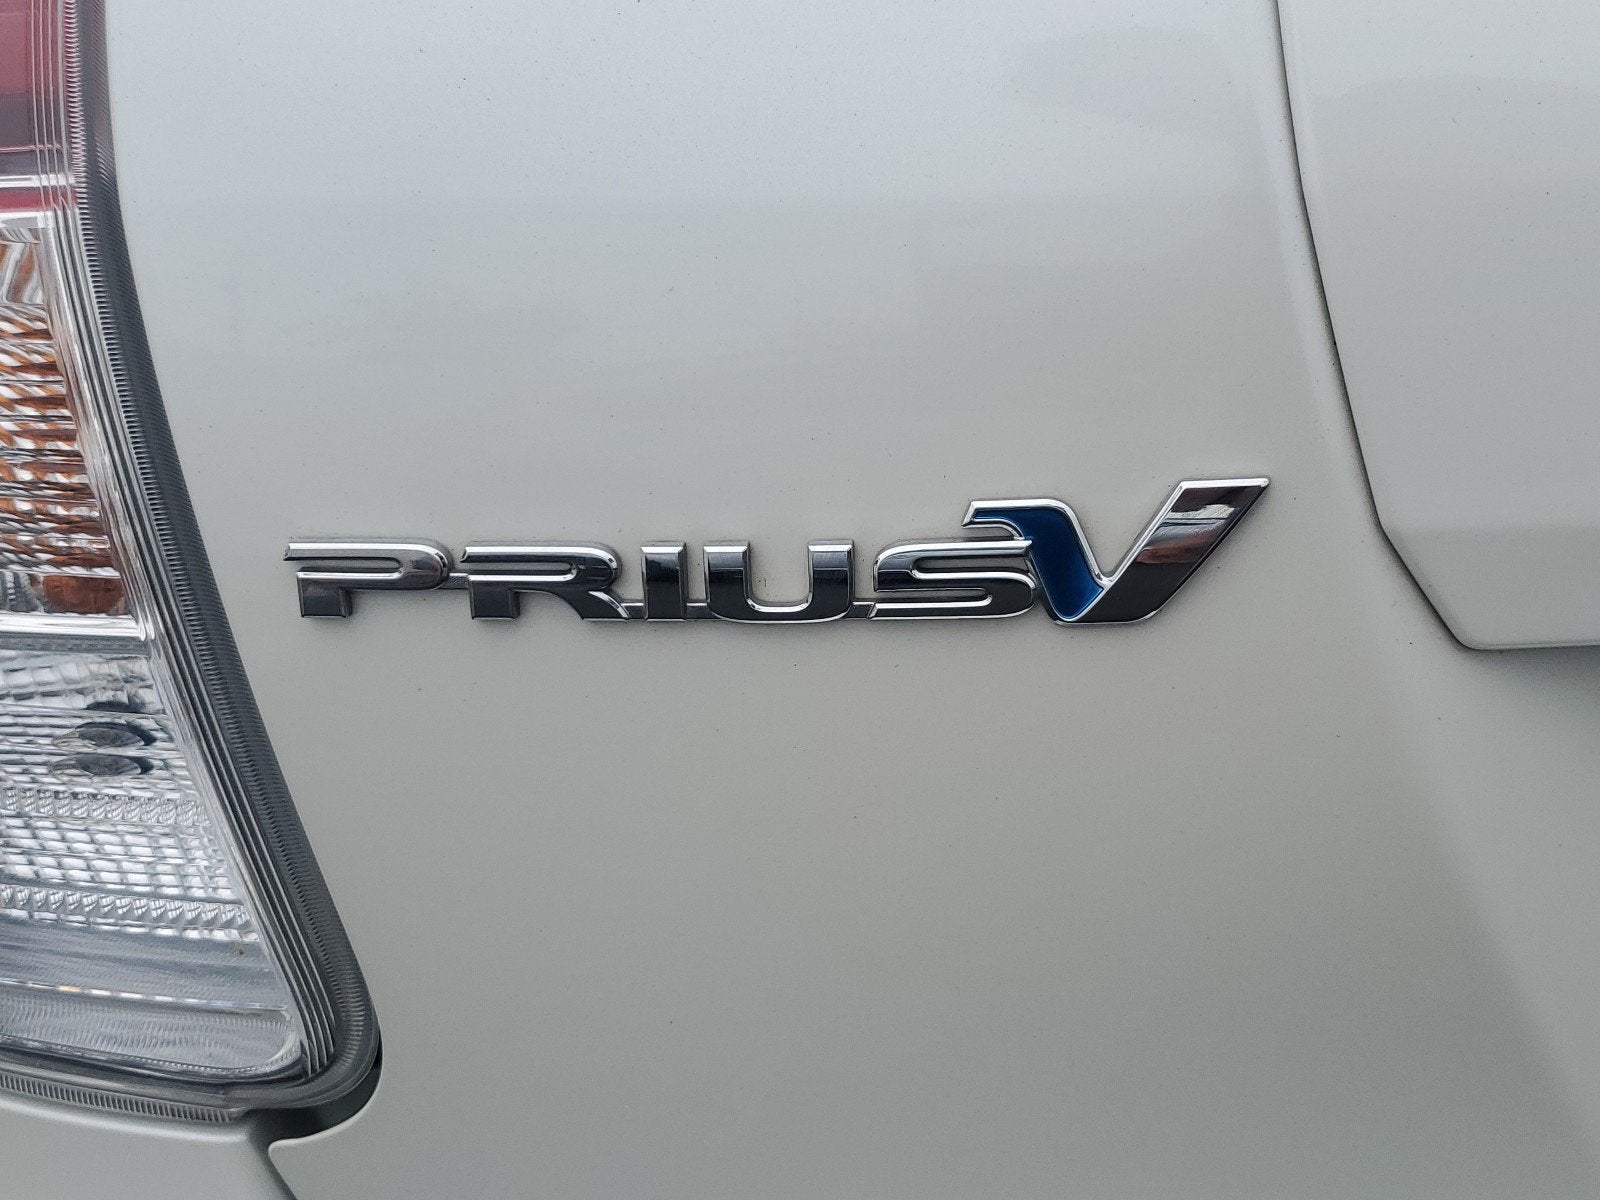 2017 Toyota Prius v Five